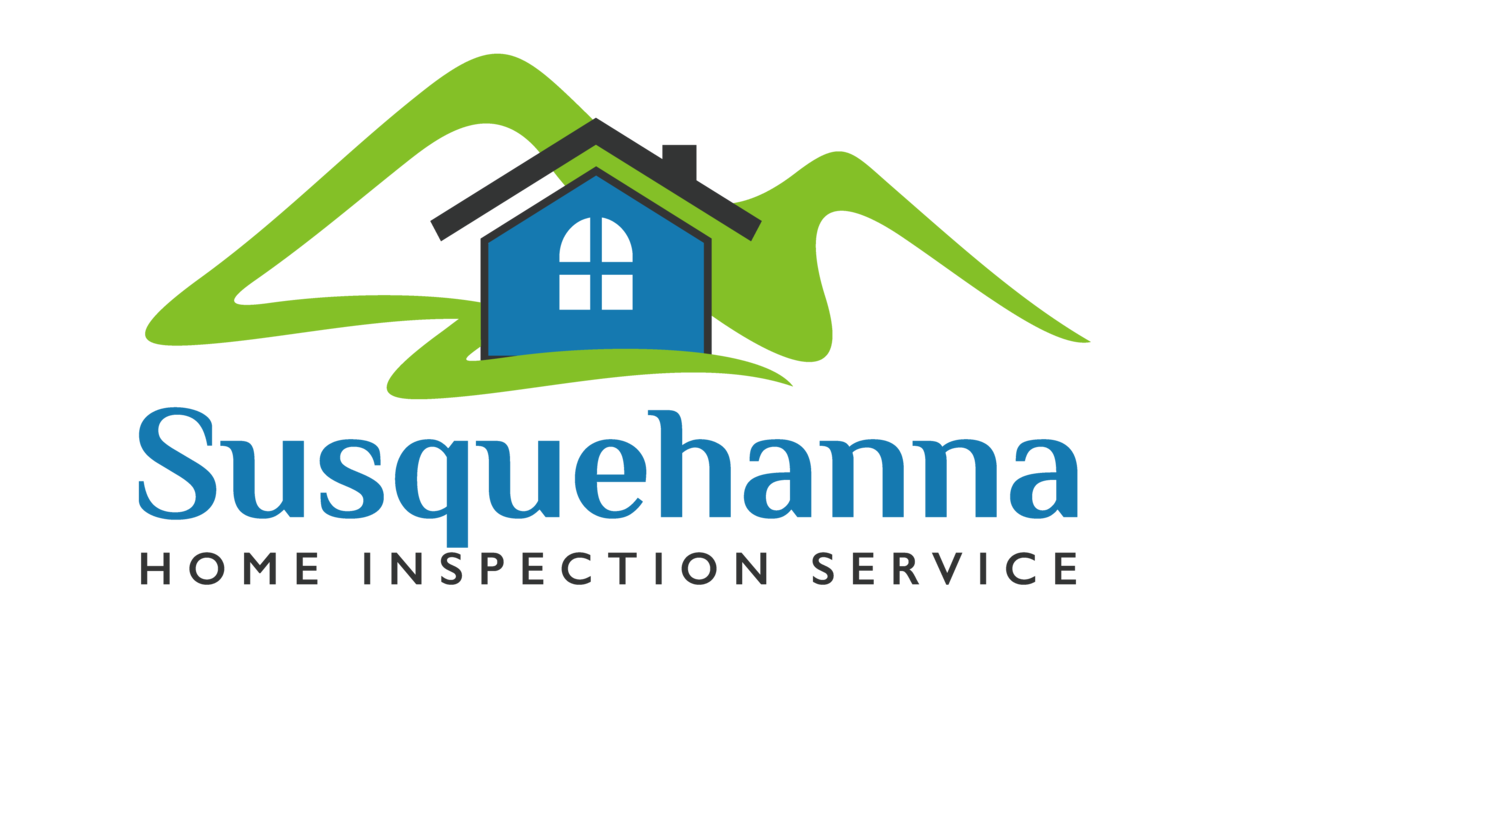 Susquehanna Home Inspection Service